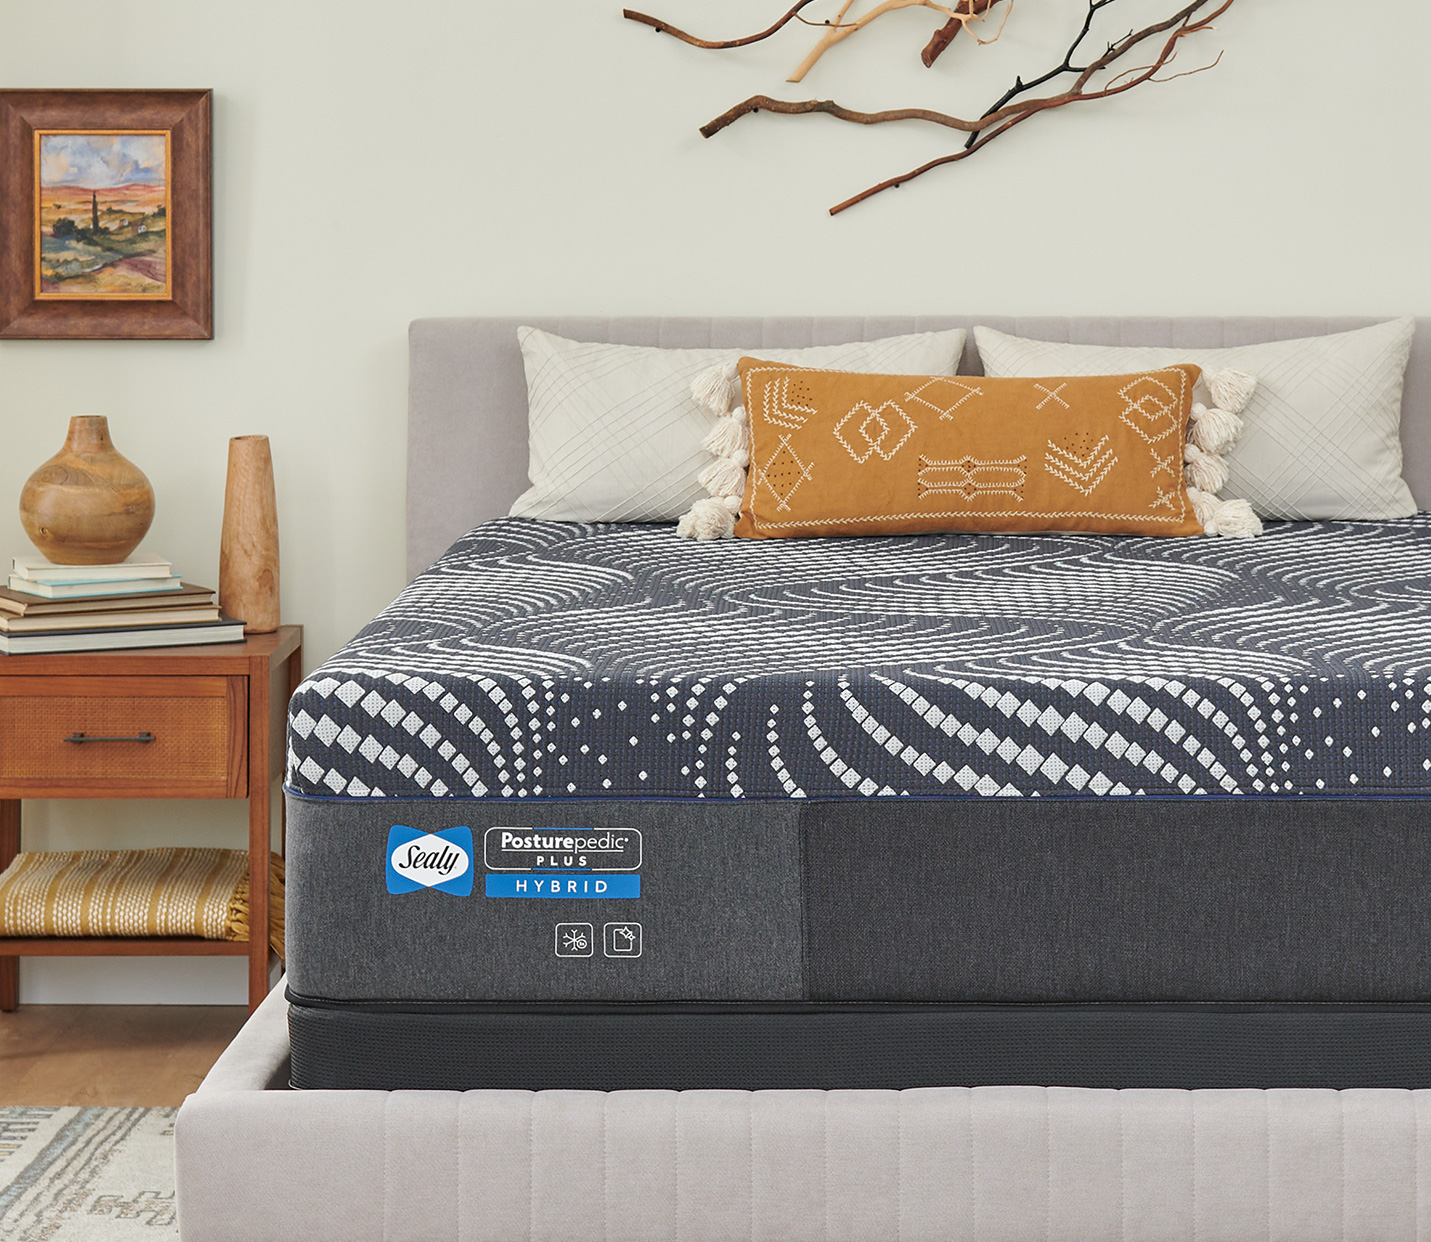 Sealy Hybrid Posturepedic® bed in styled bedroom